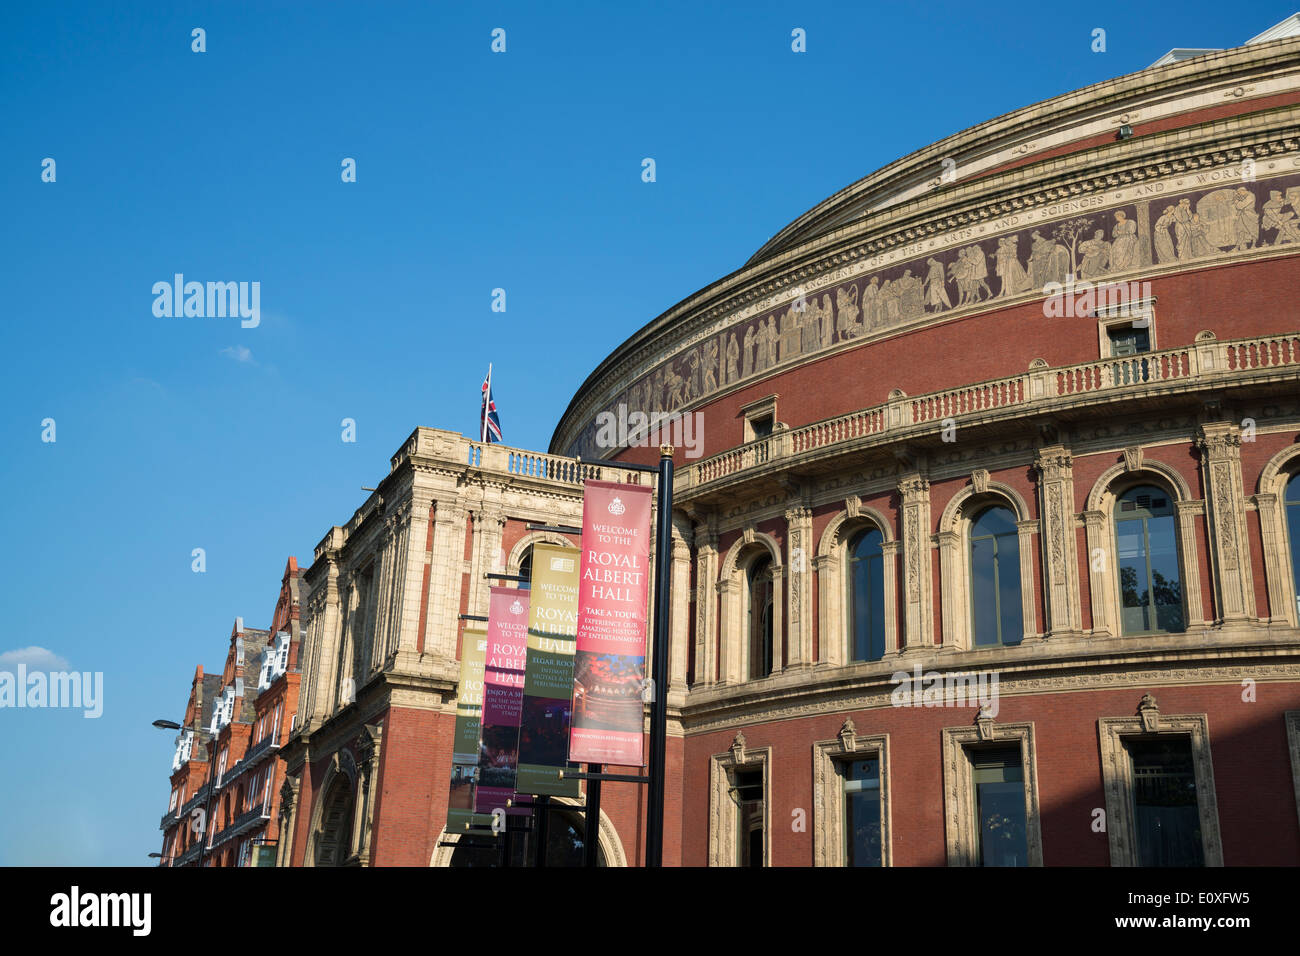 Royal Albert Hall, London, UK Banque D'Images